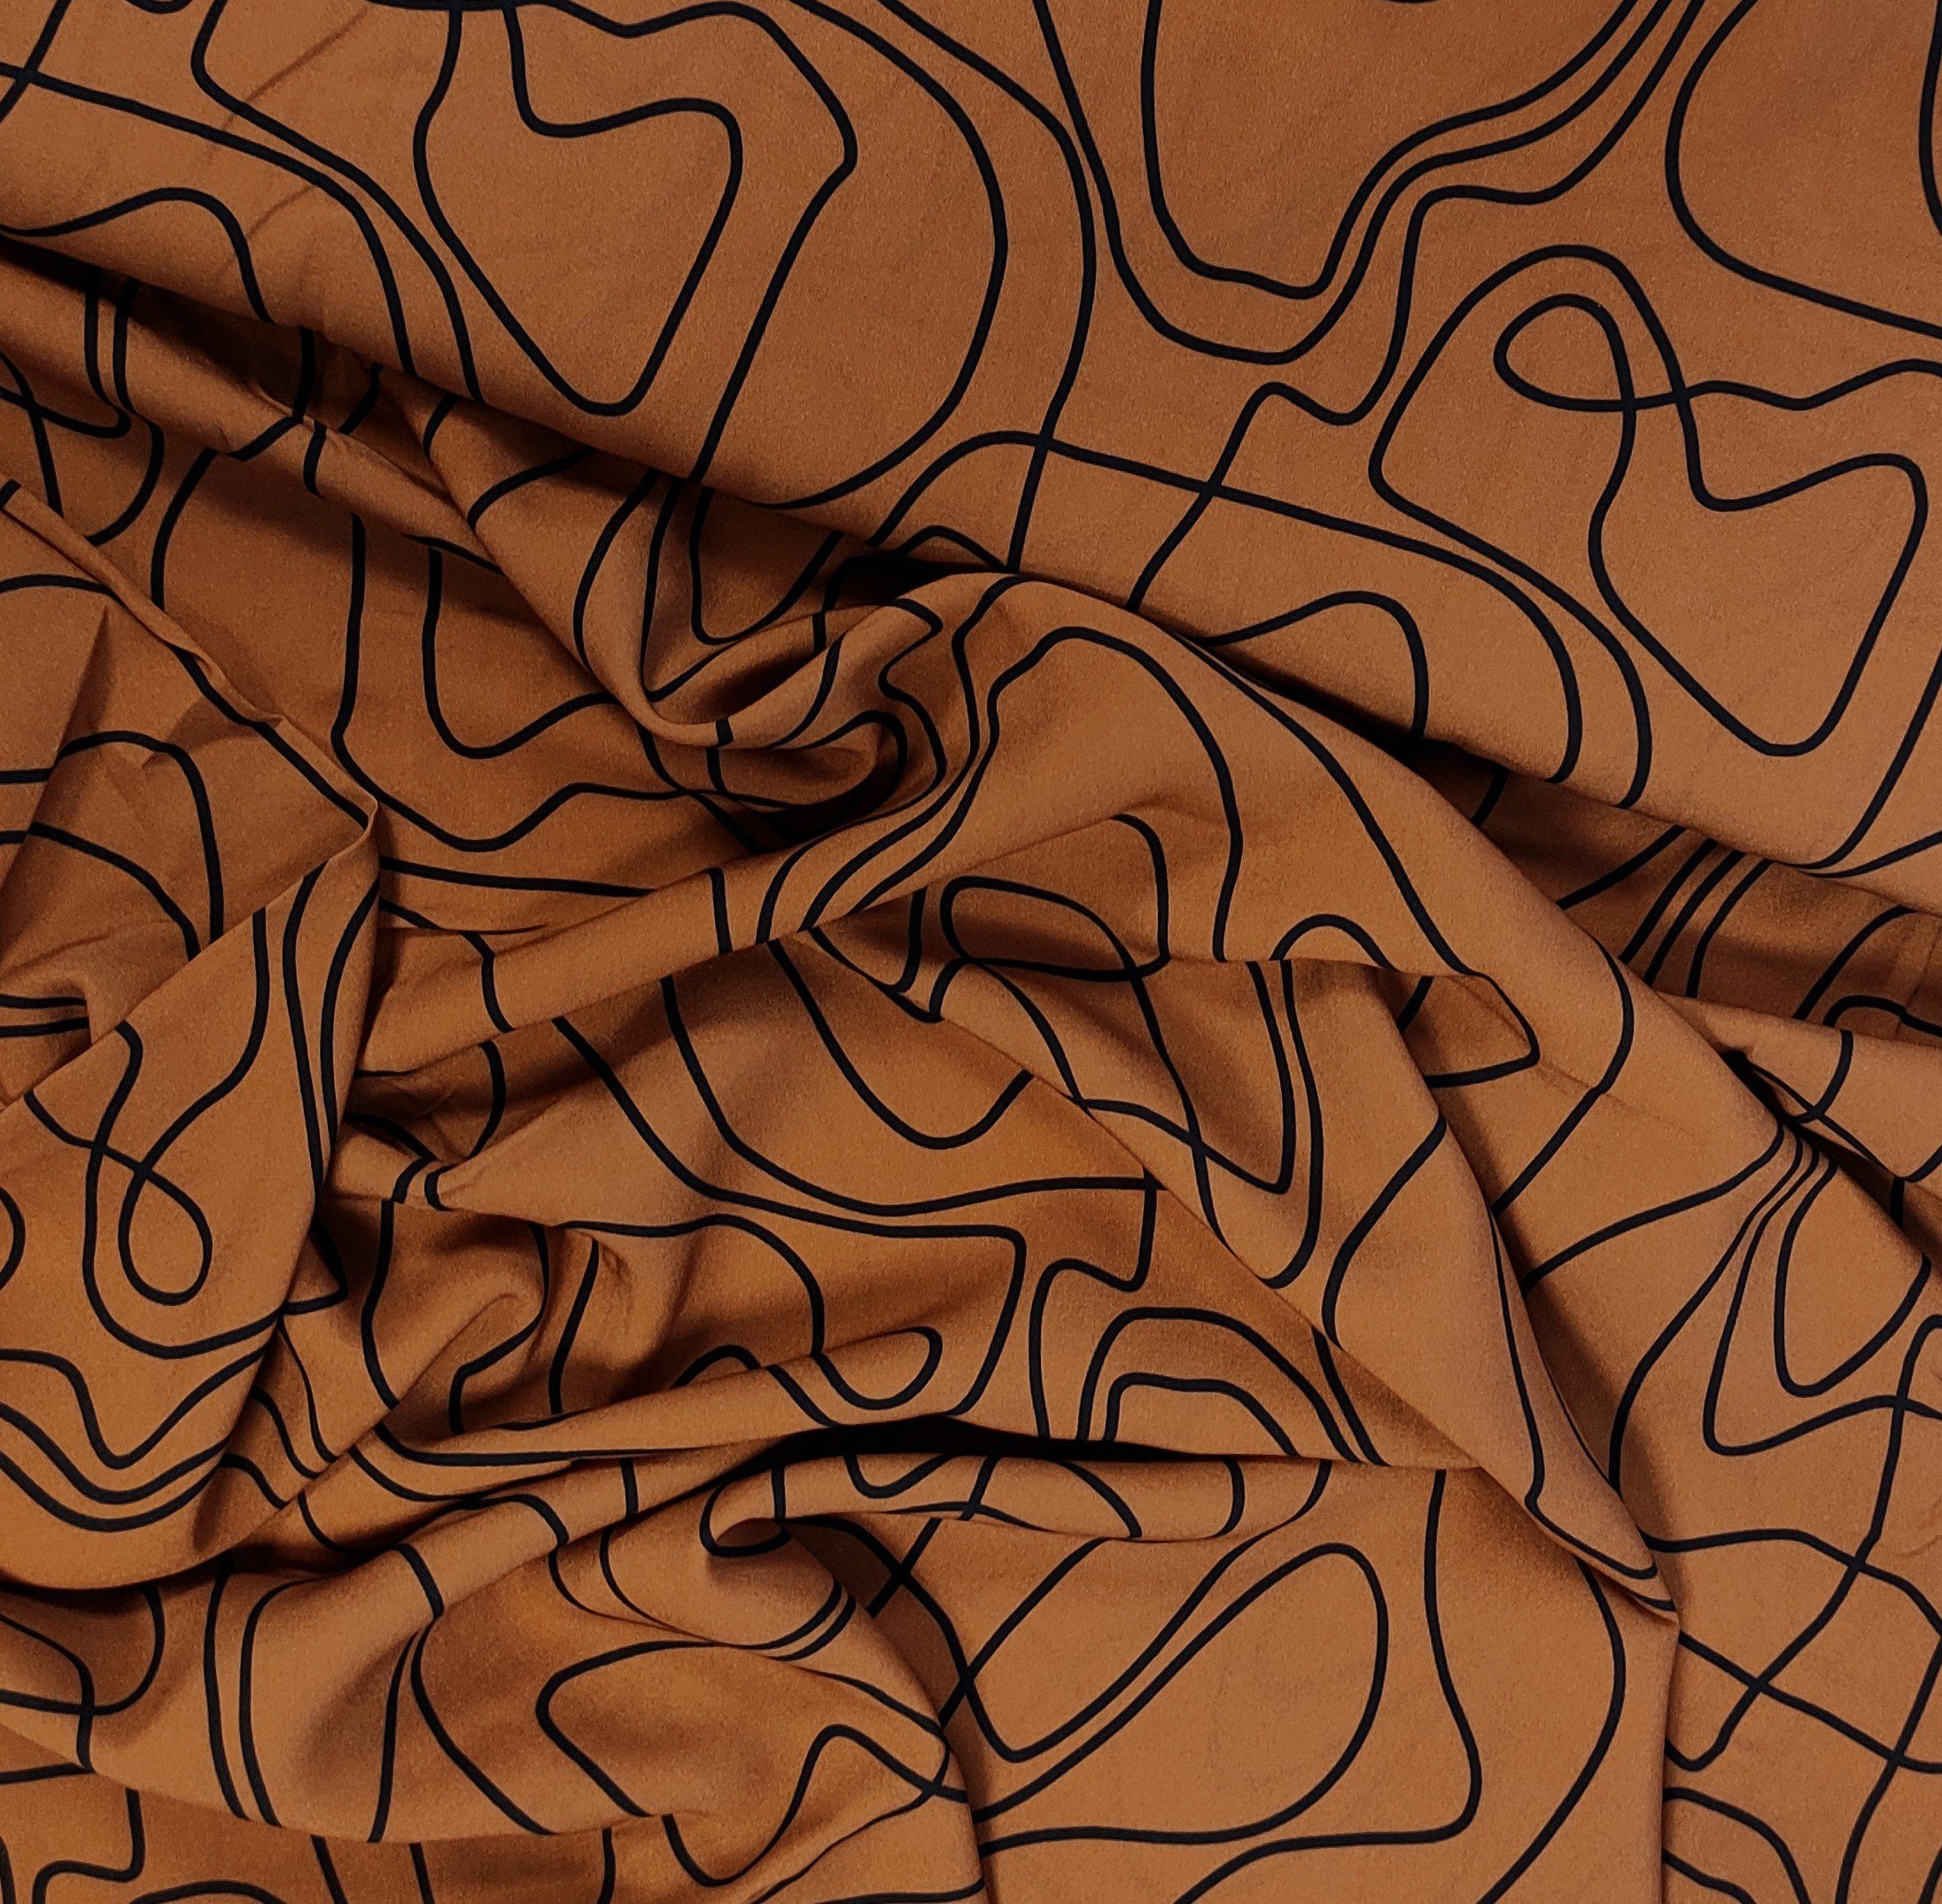 larissastoffe Stoff Viskose Stoff Linien, Swafing abstrakt terrakotta,  18,90 EUR/m, Meterware, 50 cm x 150 cm